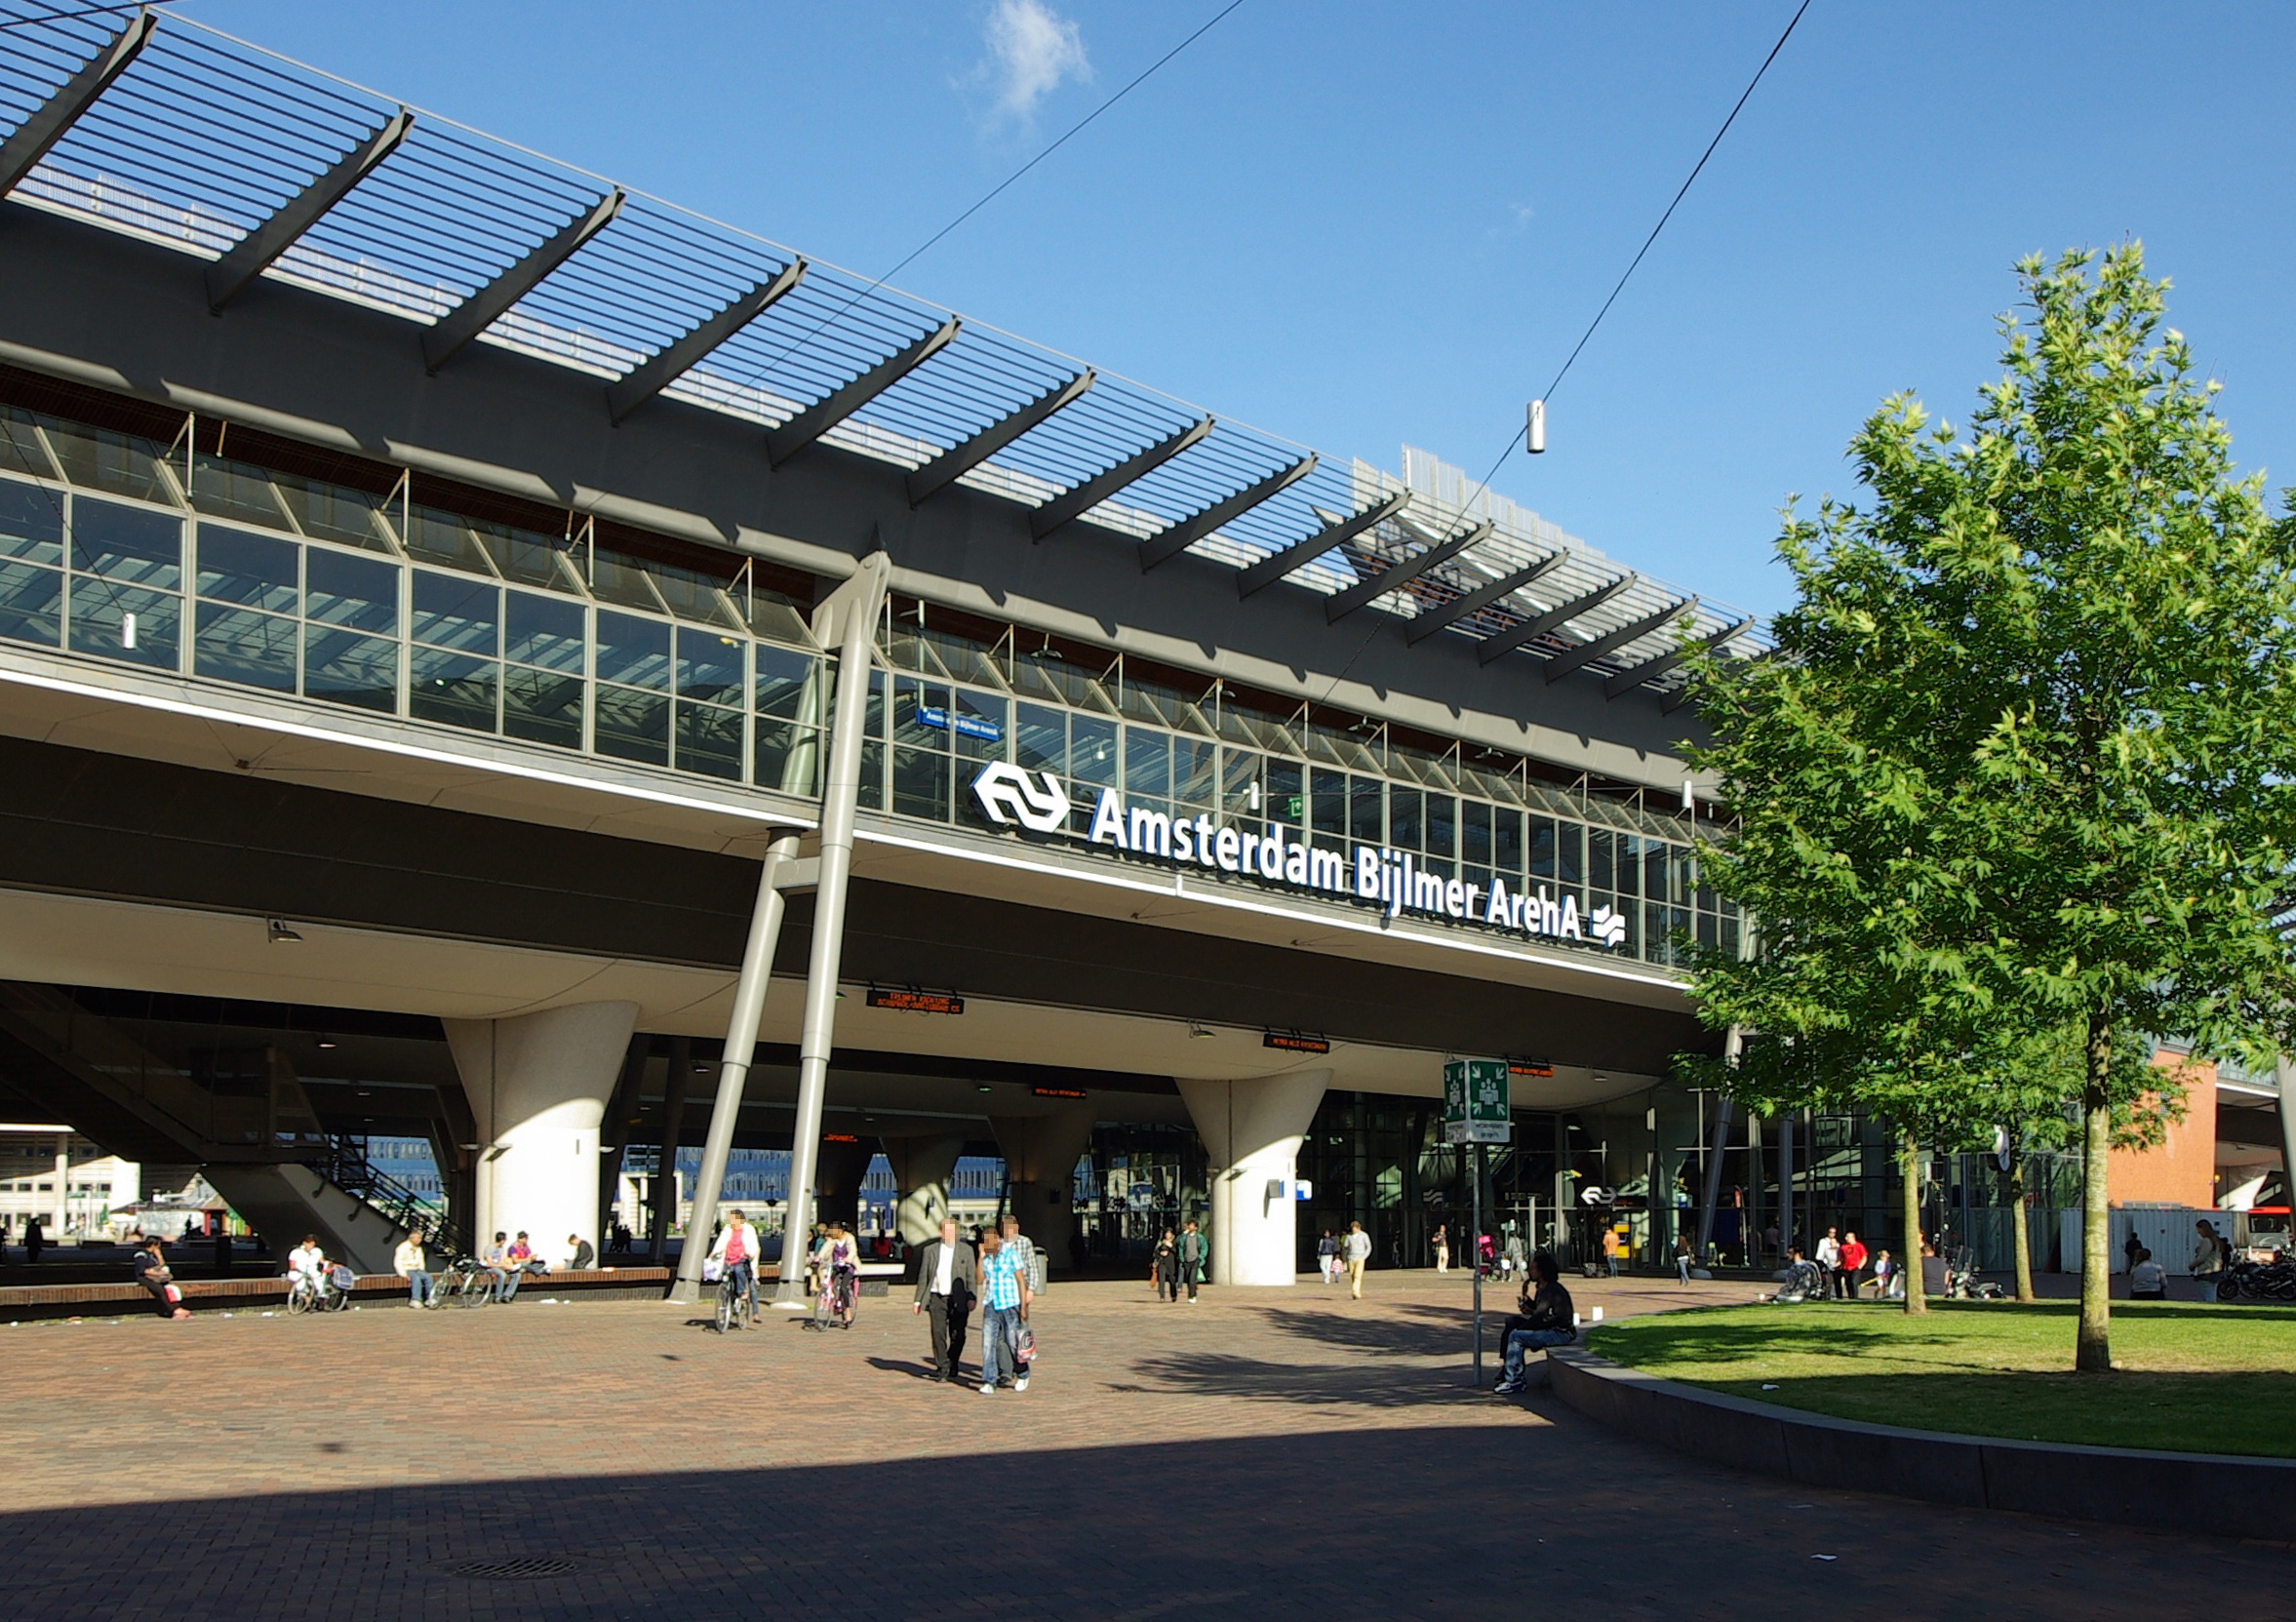 Station Amsterdam Bijlmer ArenA